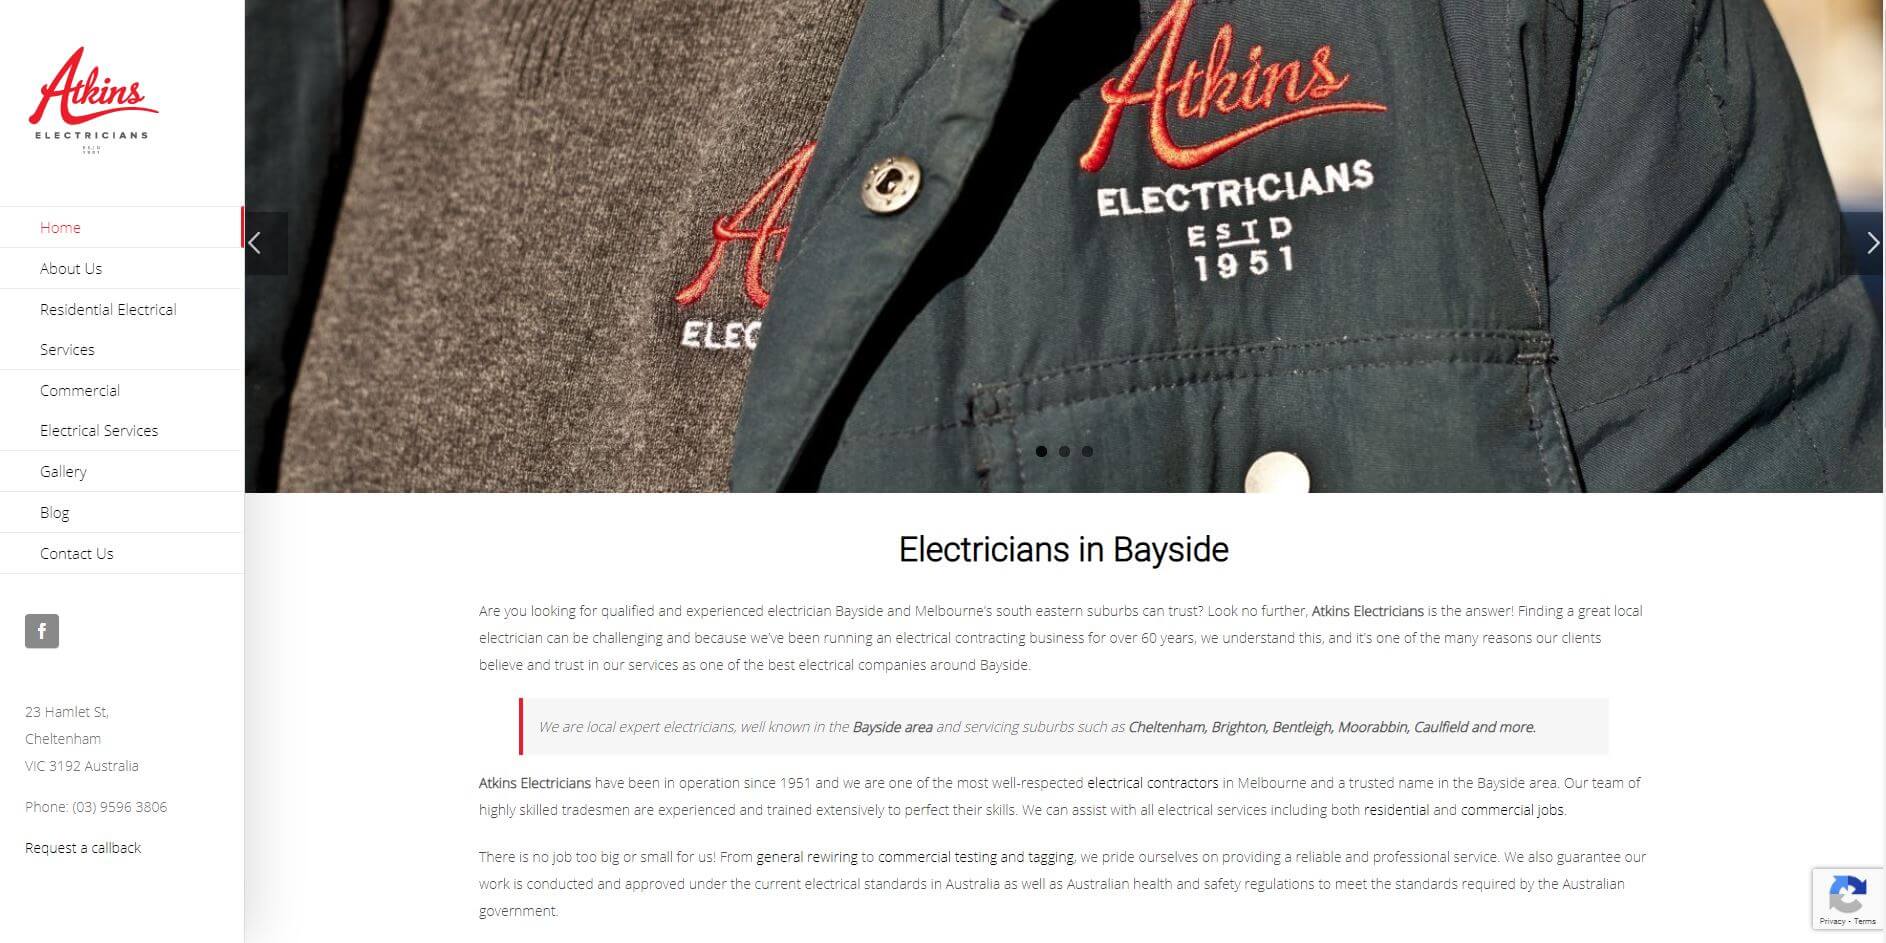 Atkins Electricians